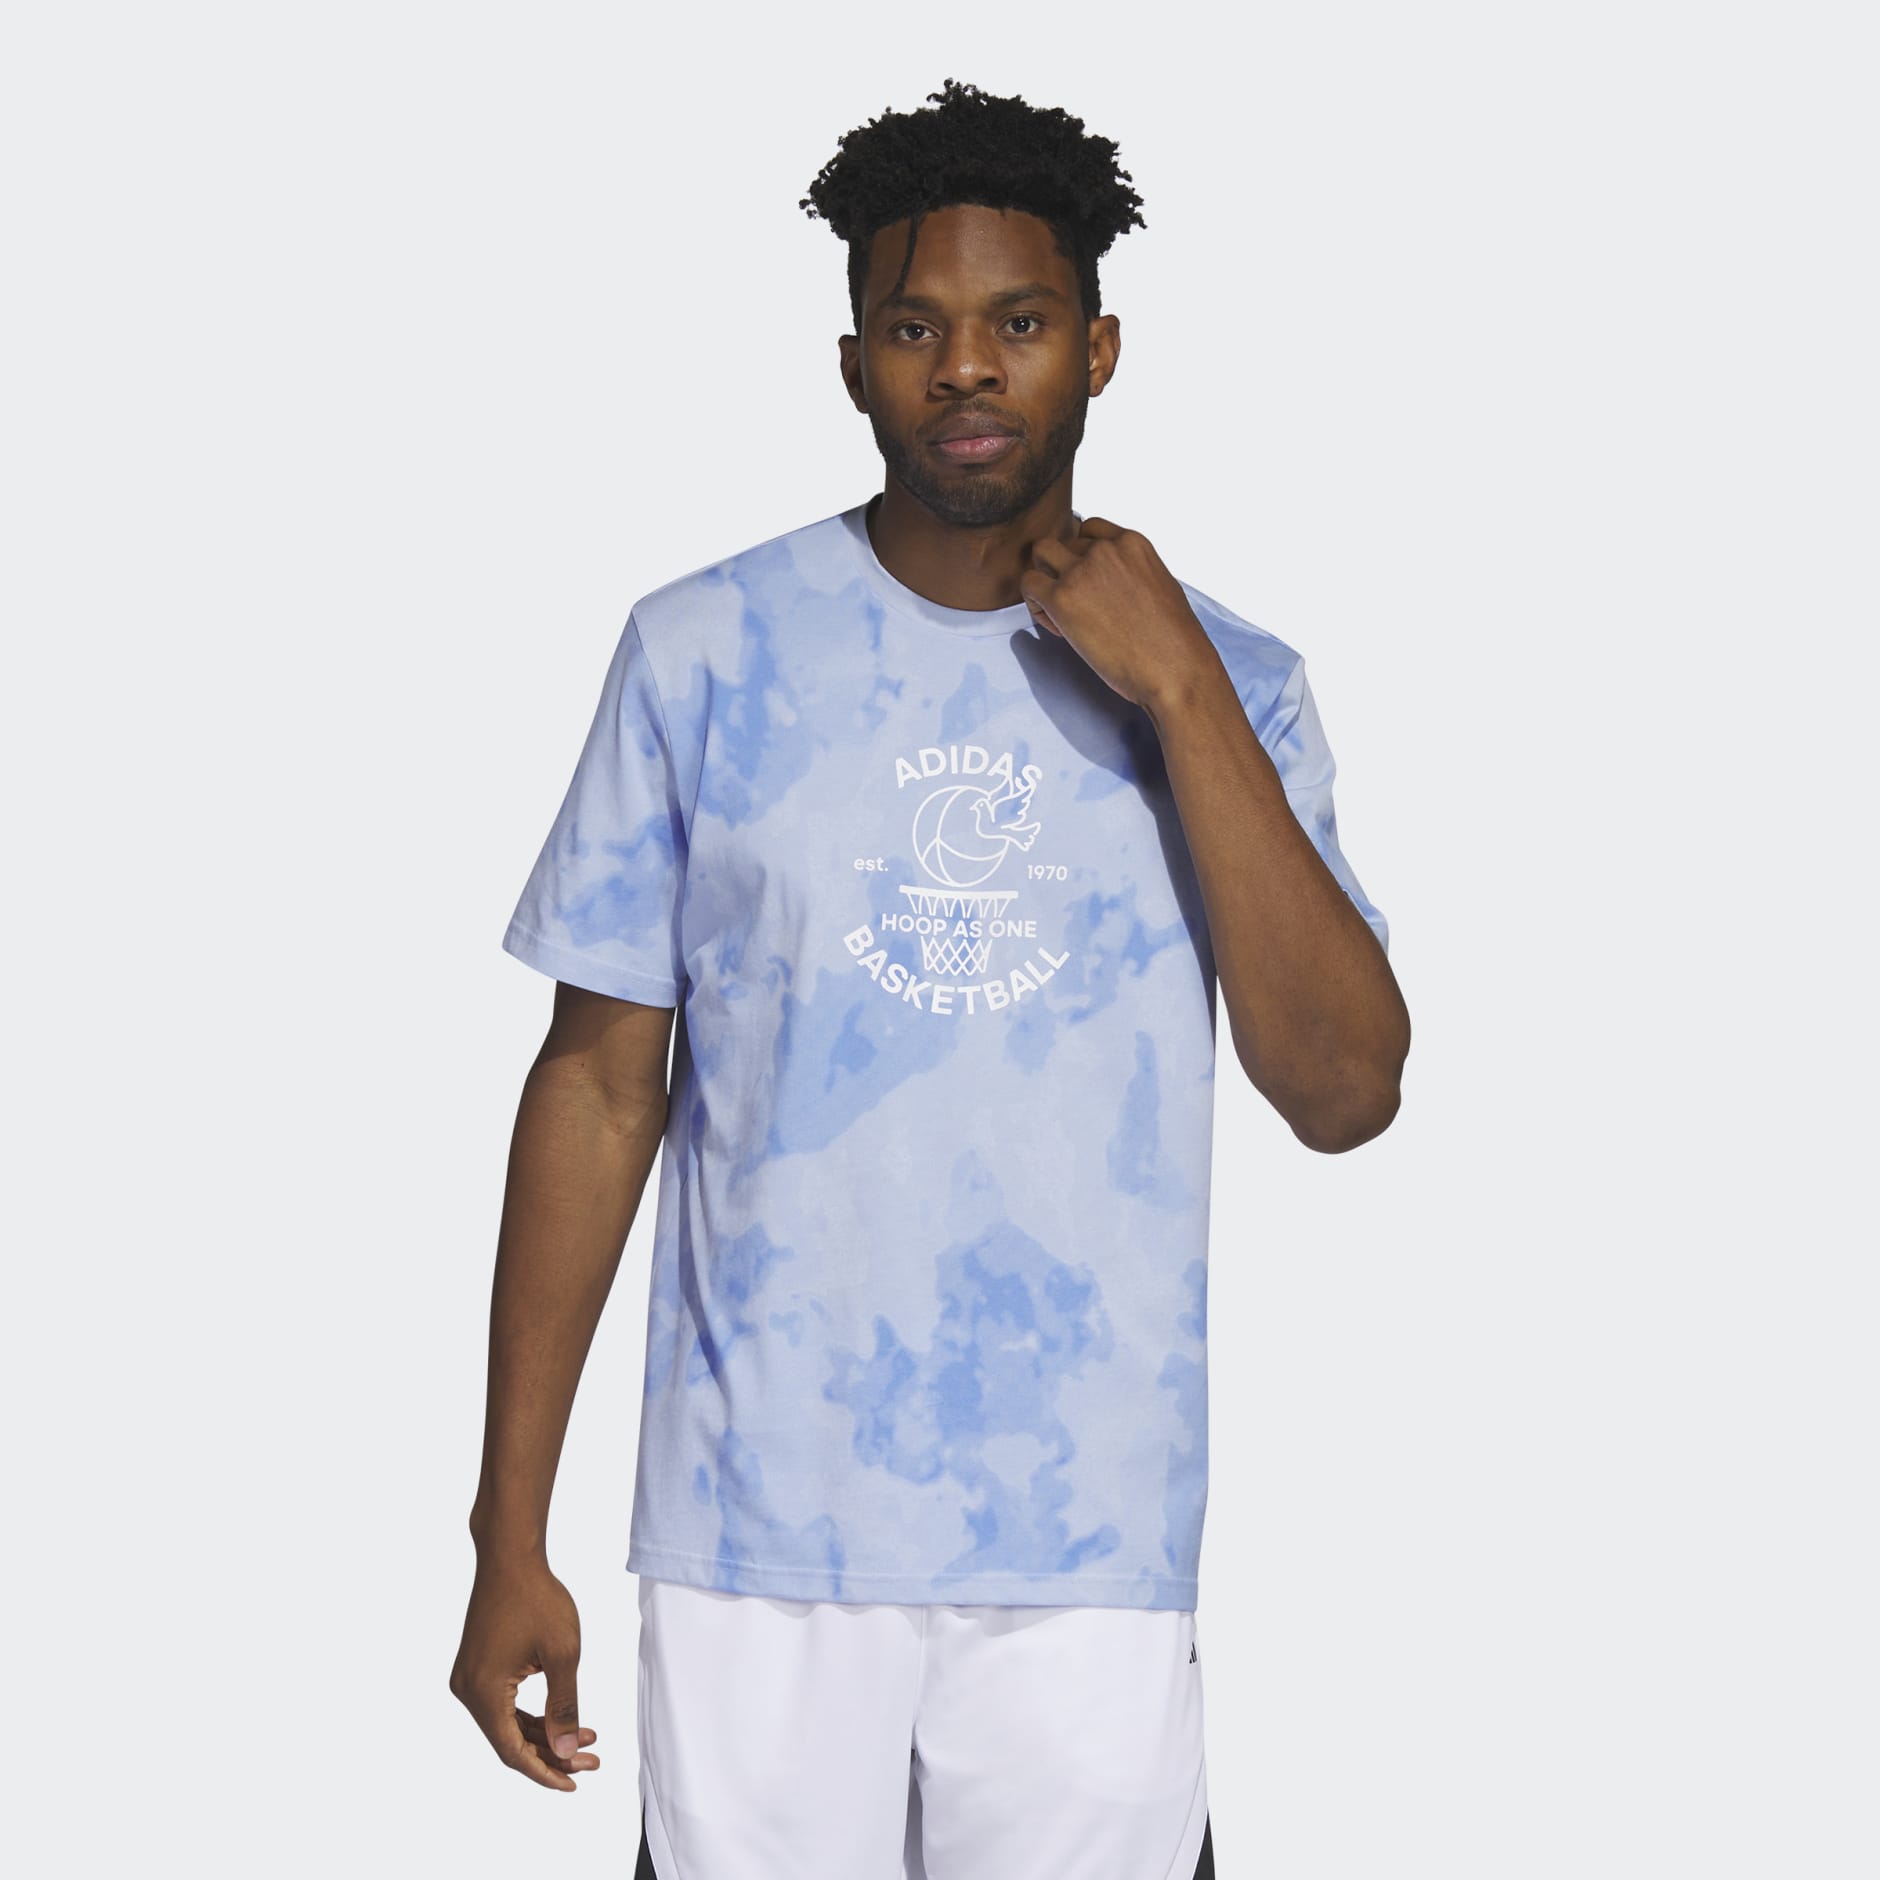 Men's Clothing - Worldwide Hoops Basketball Graphic Tee - Blue | adidas ...